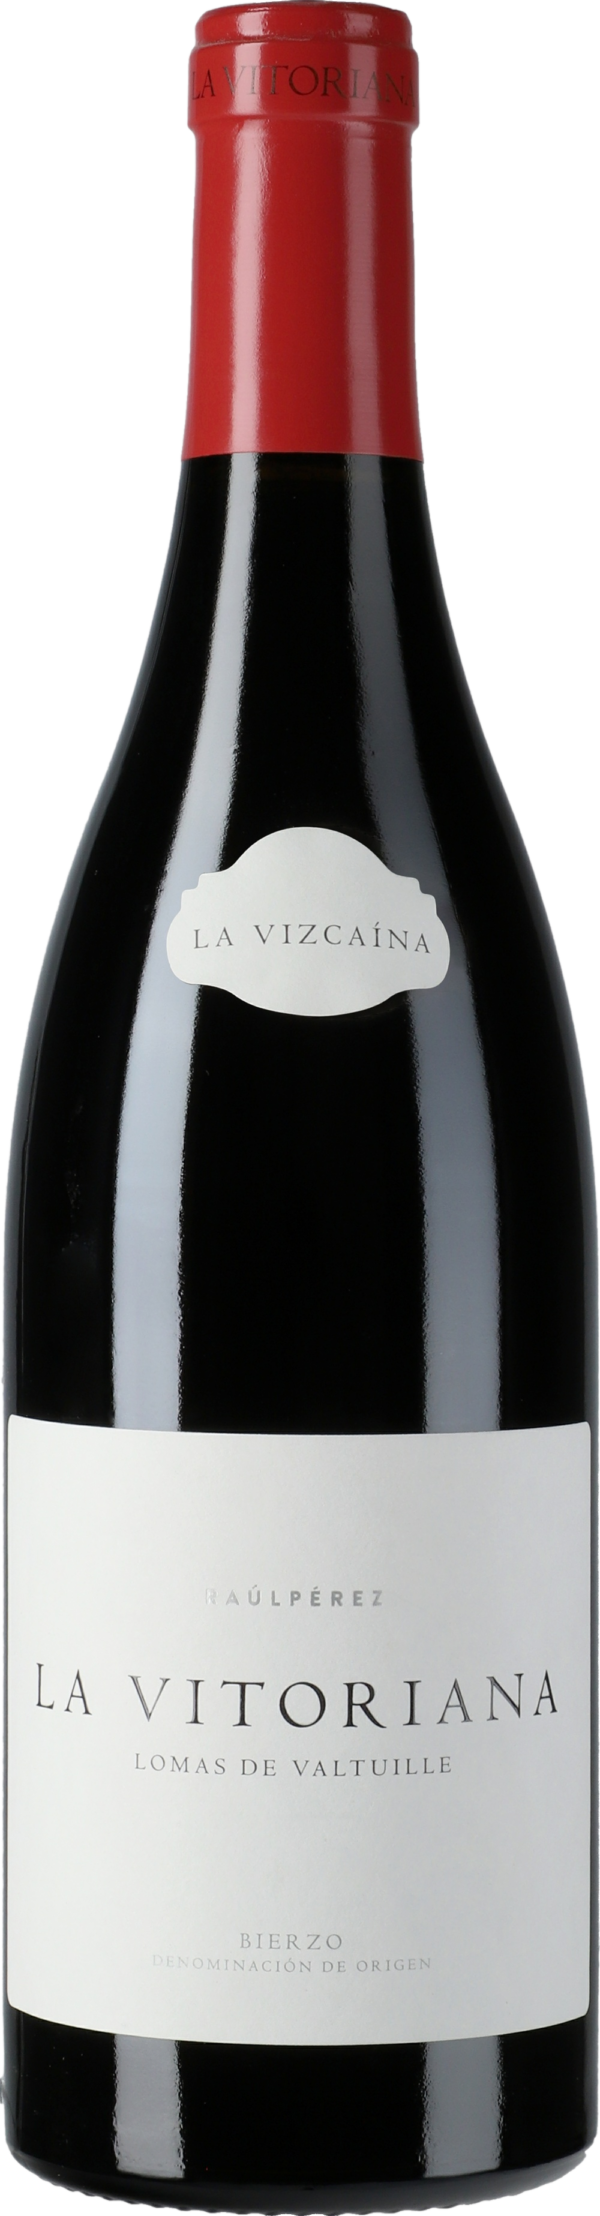 Product image of La Vizcaina La Vitoriana Mencia 2021 from 8wines